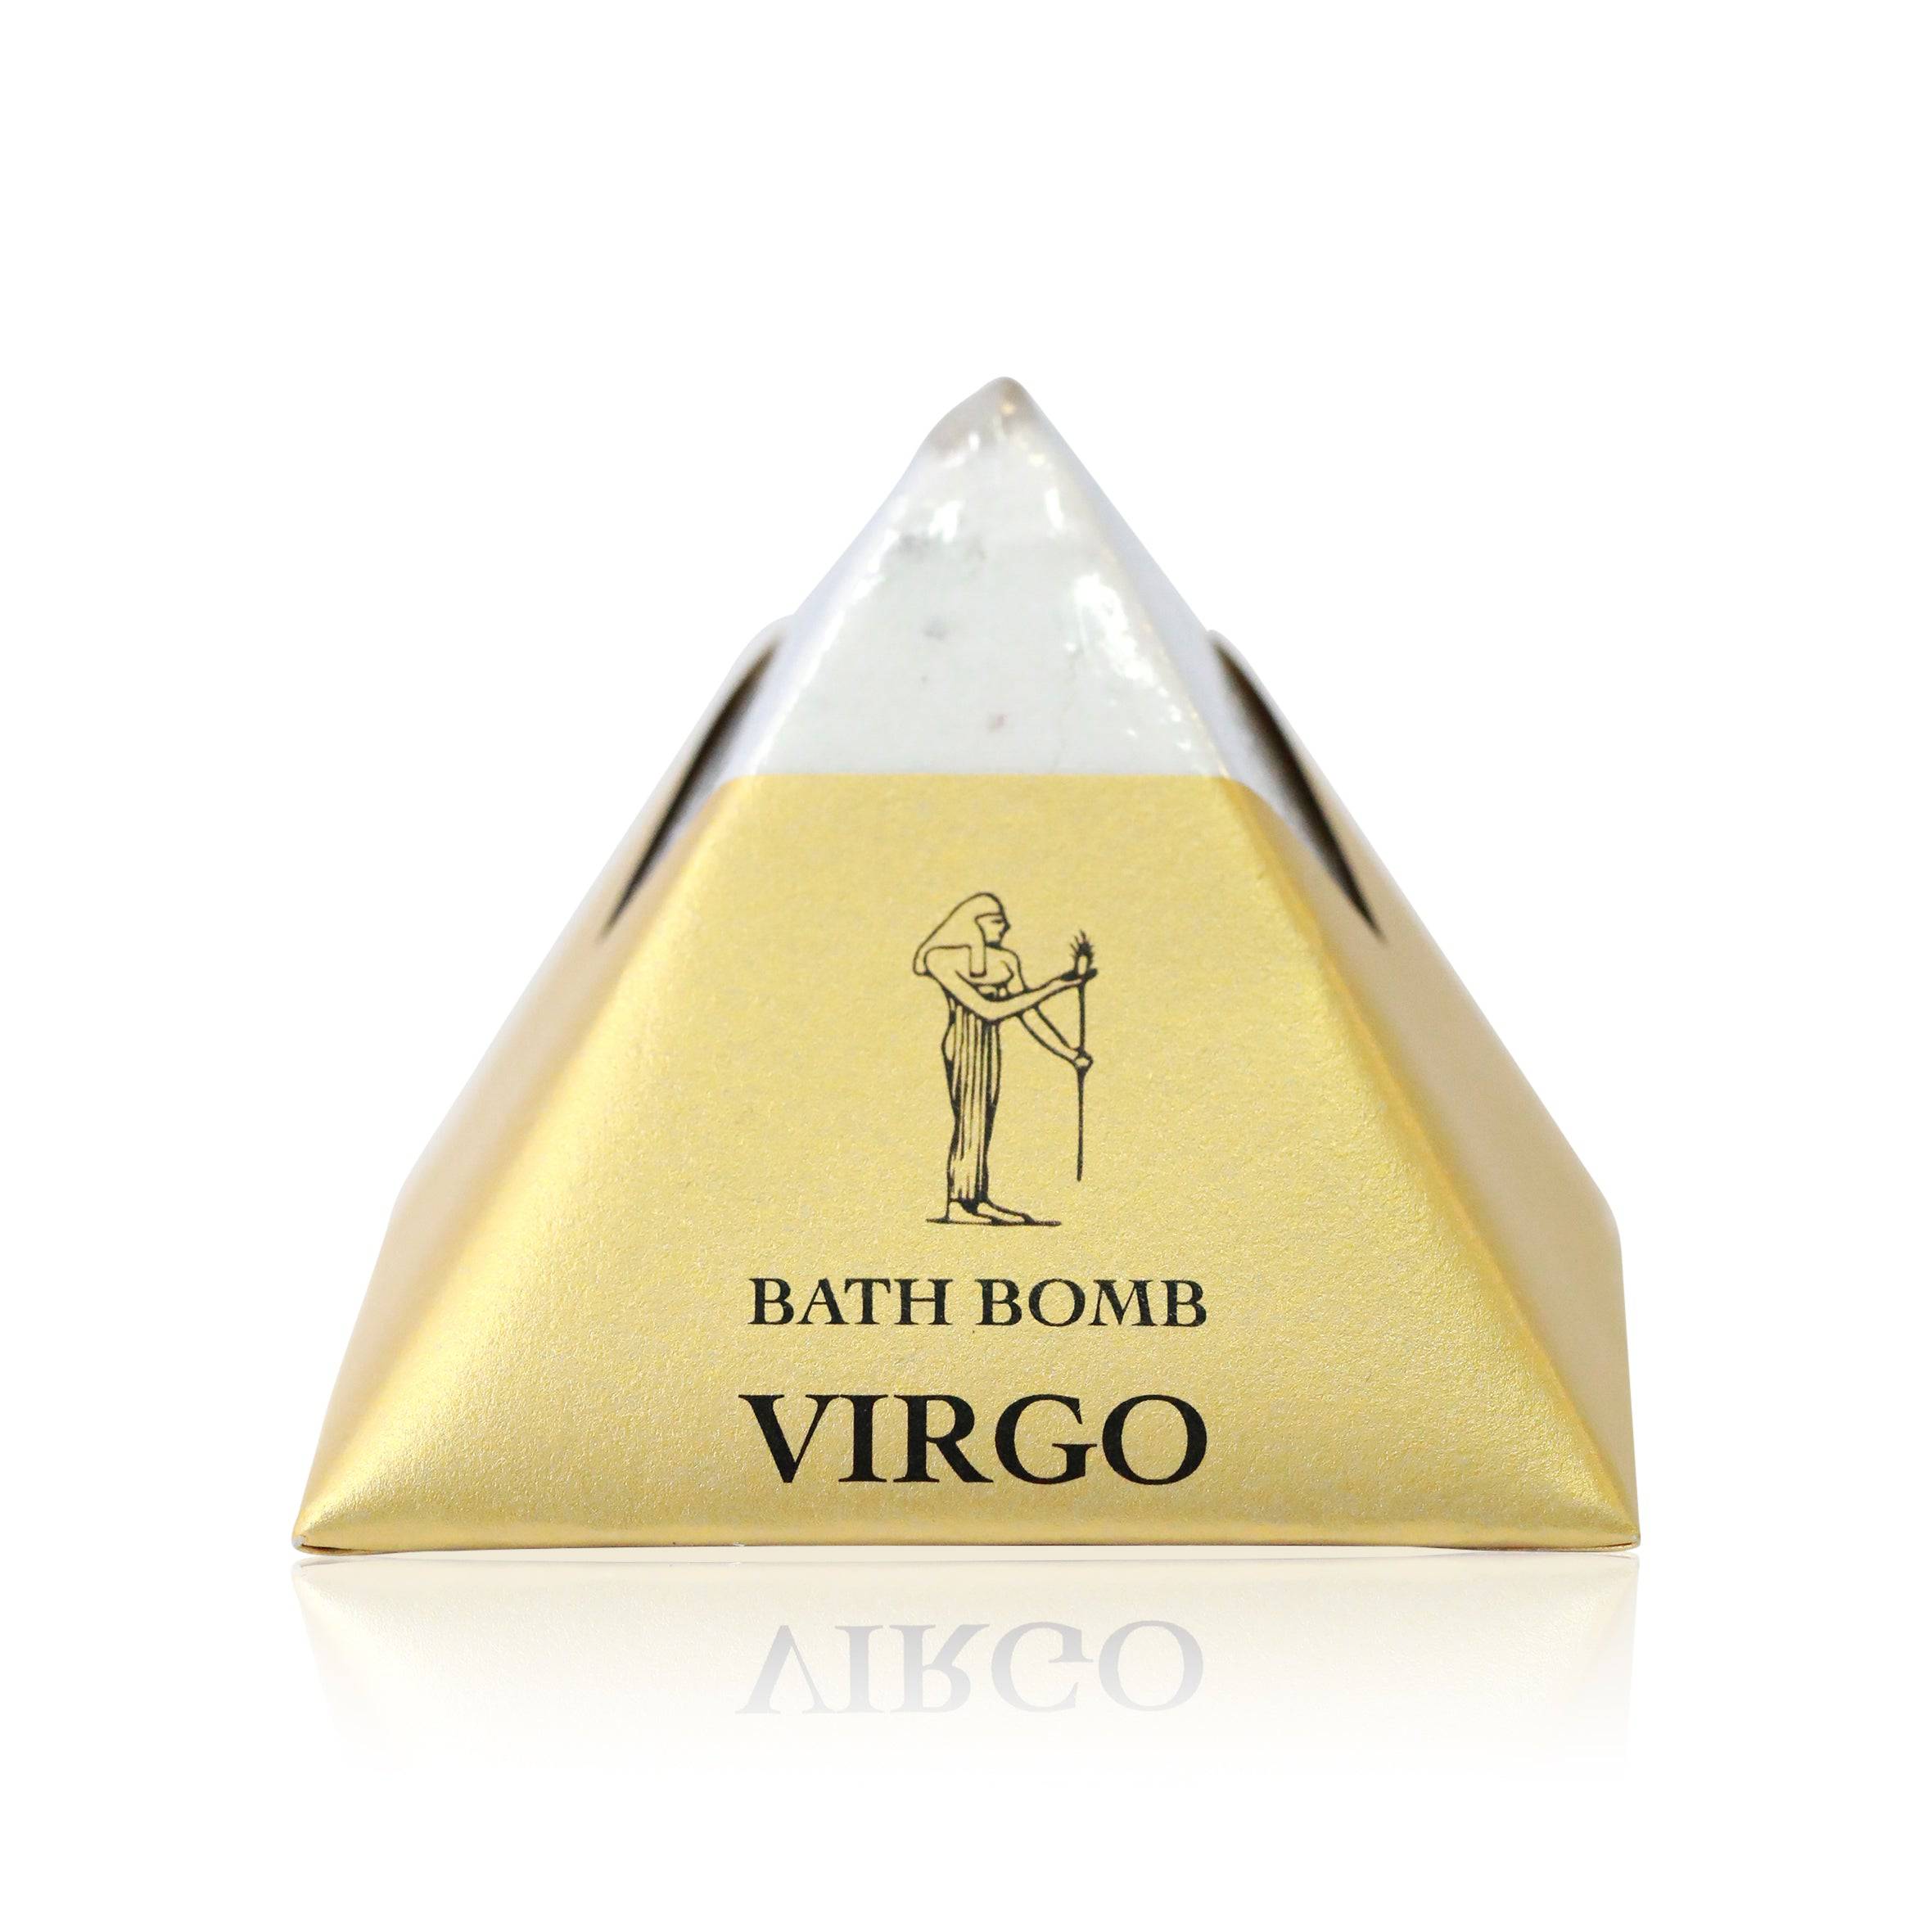 Virgo Zodiac Sign Pyramid Bath Bomb - The Gilded Witch